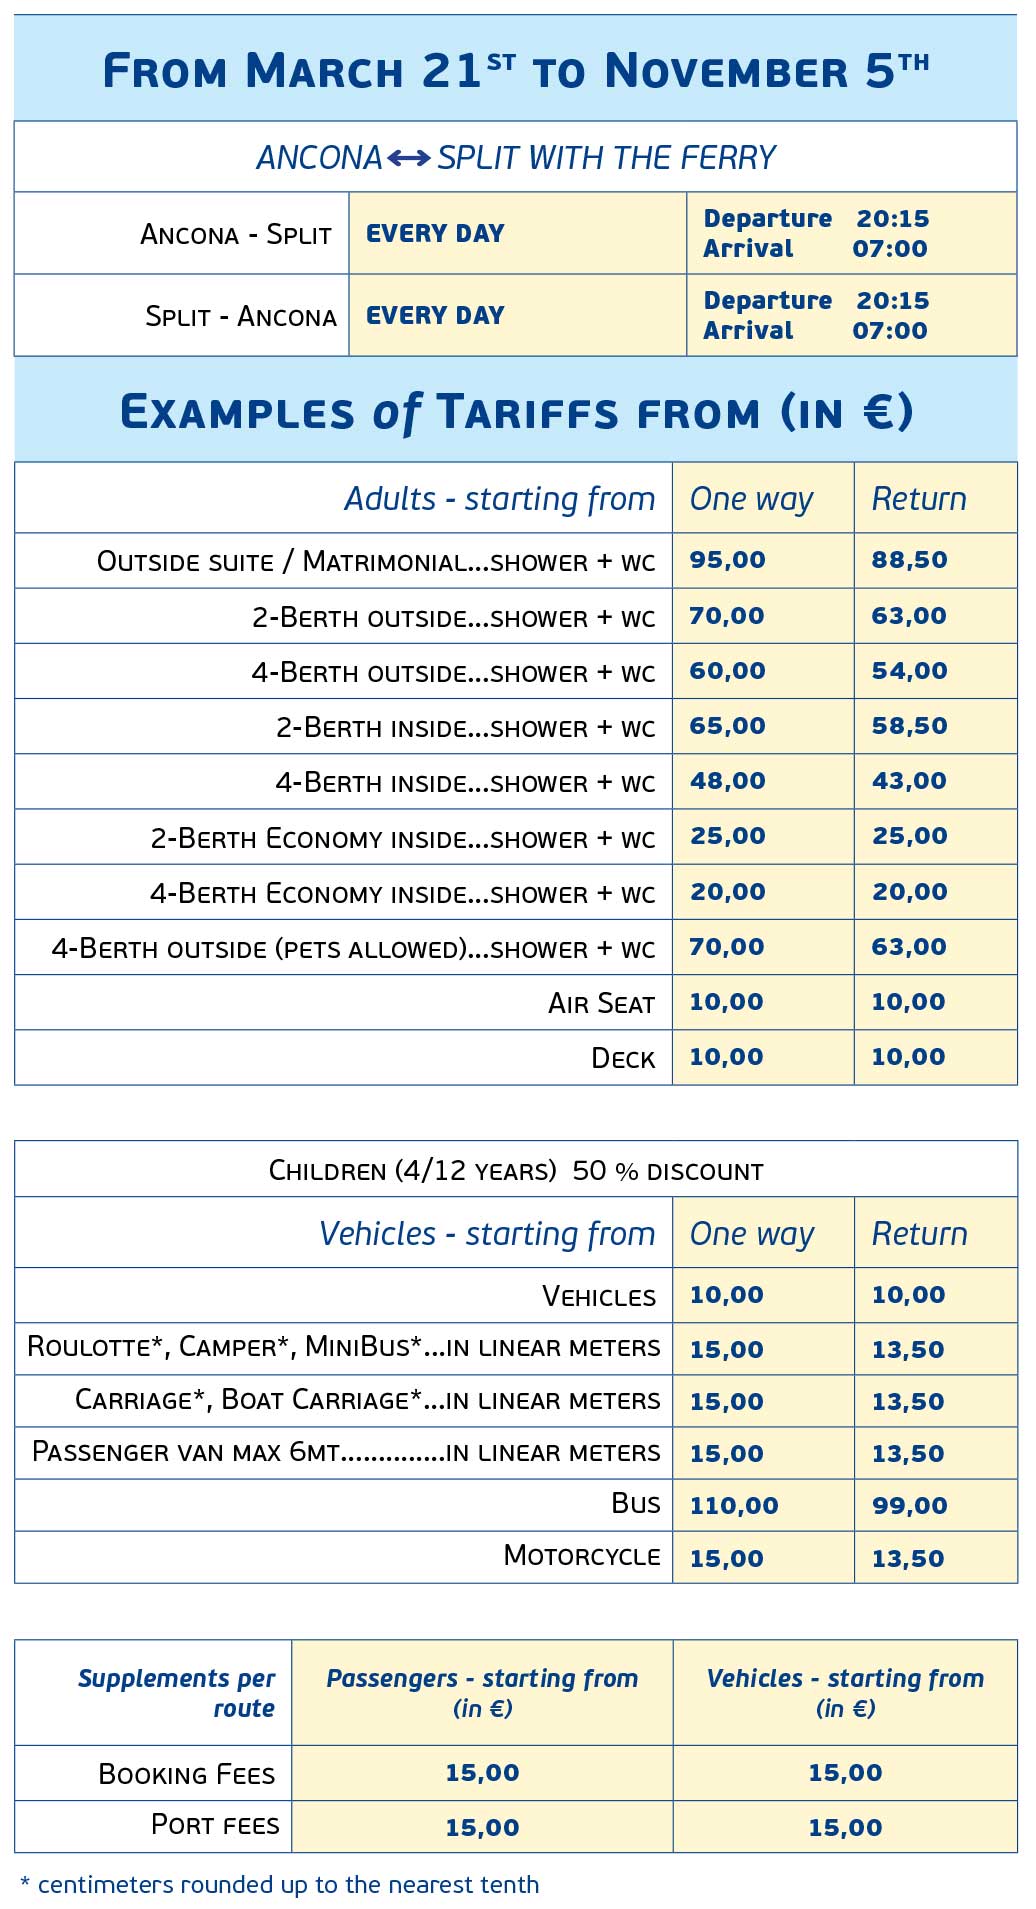 Ancona - Split Ferries- Prices for 2016: